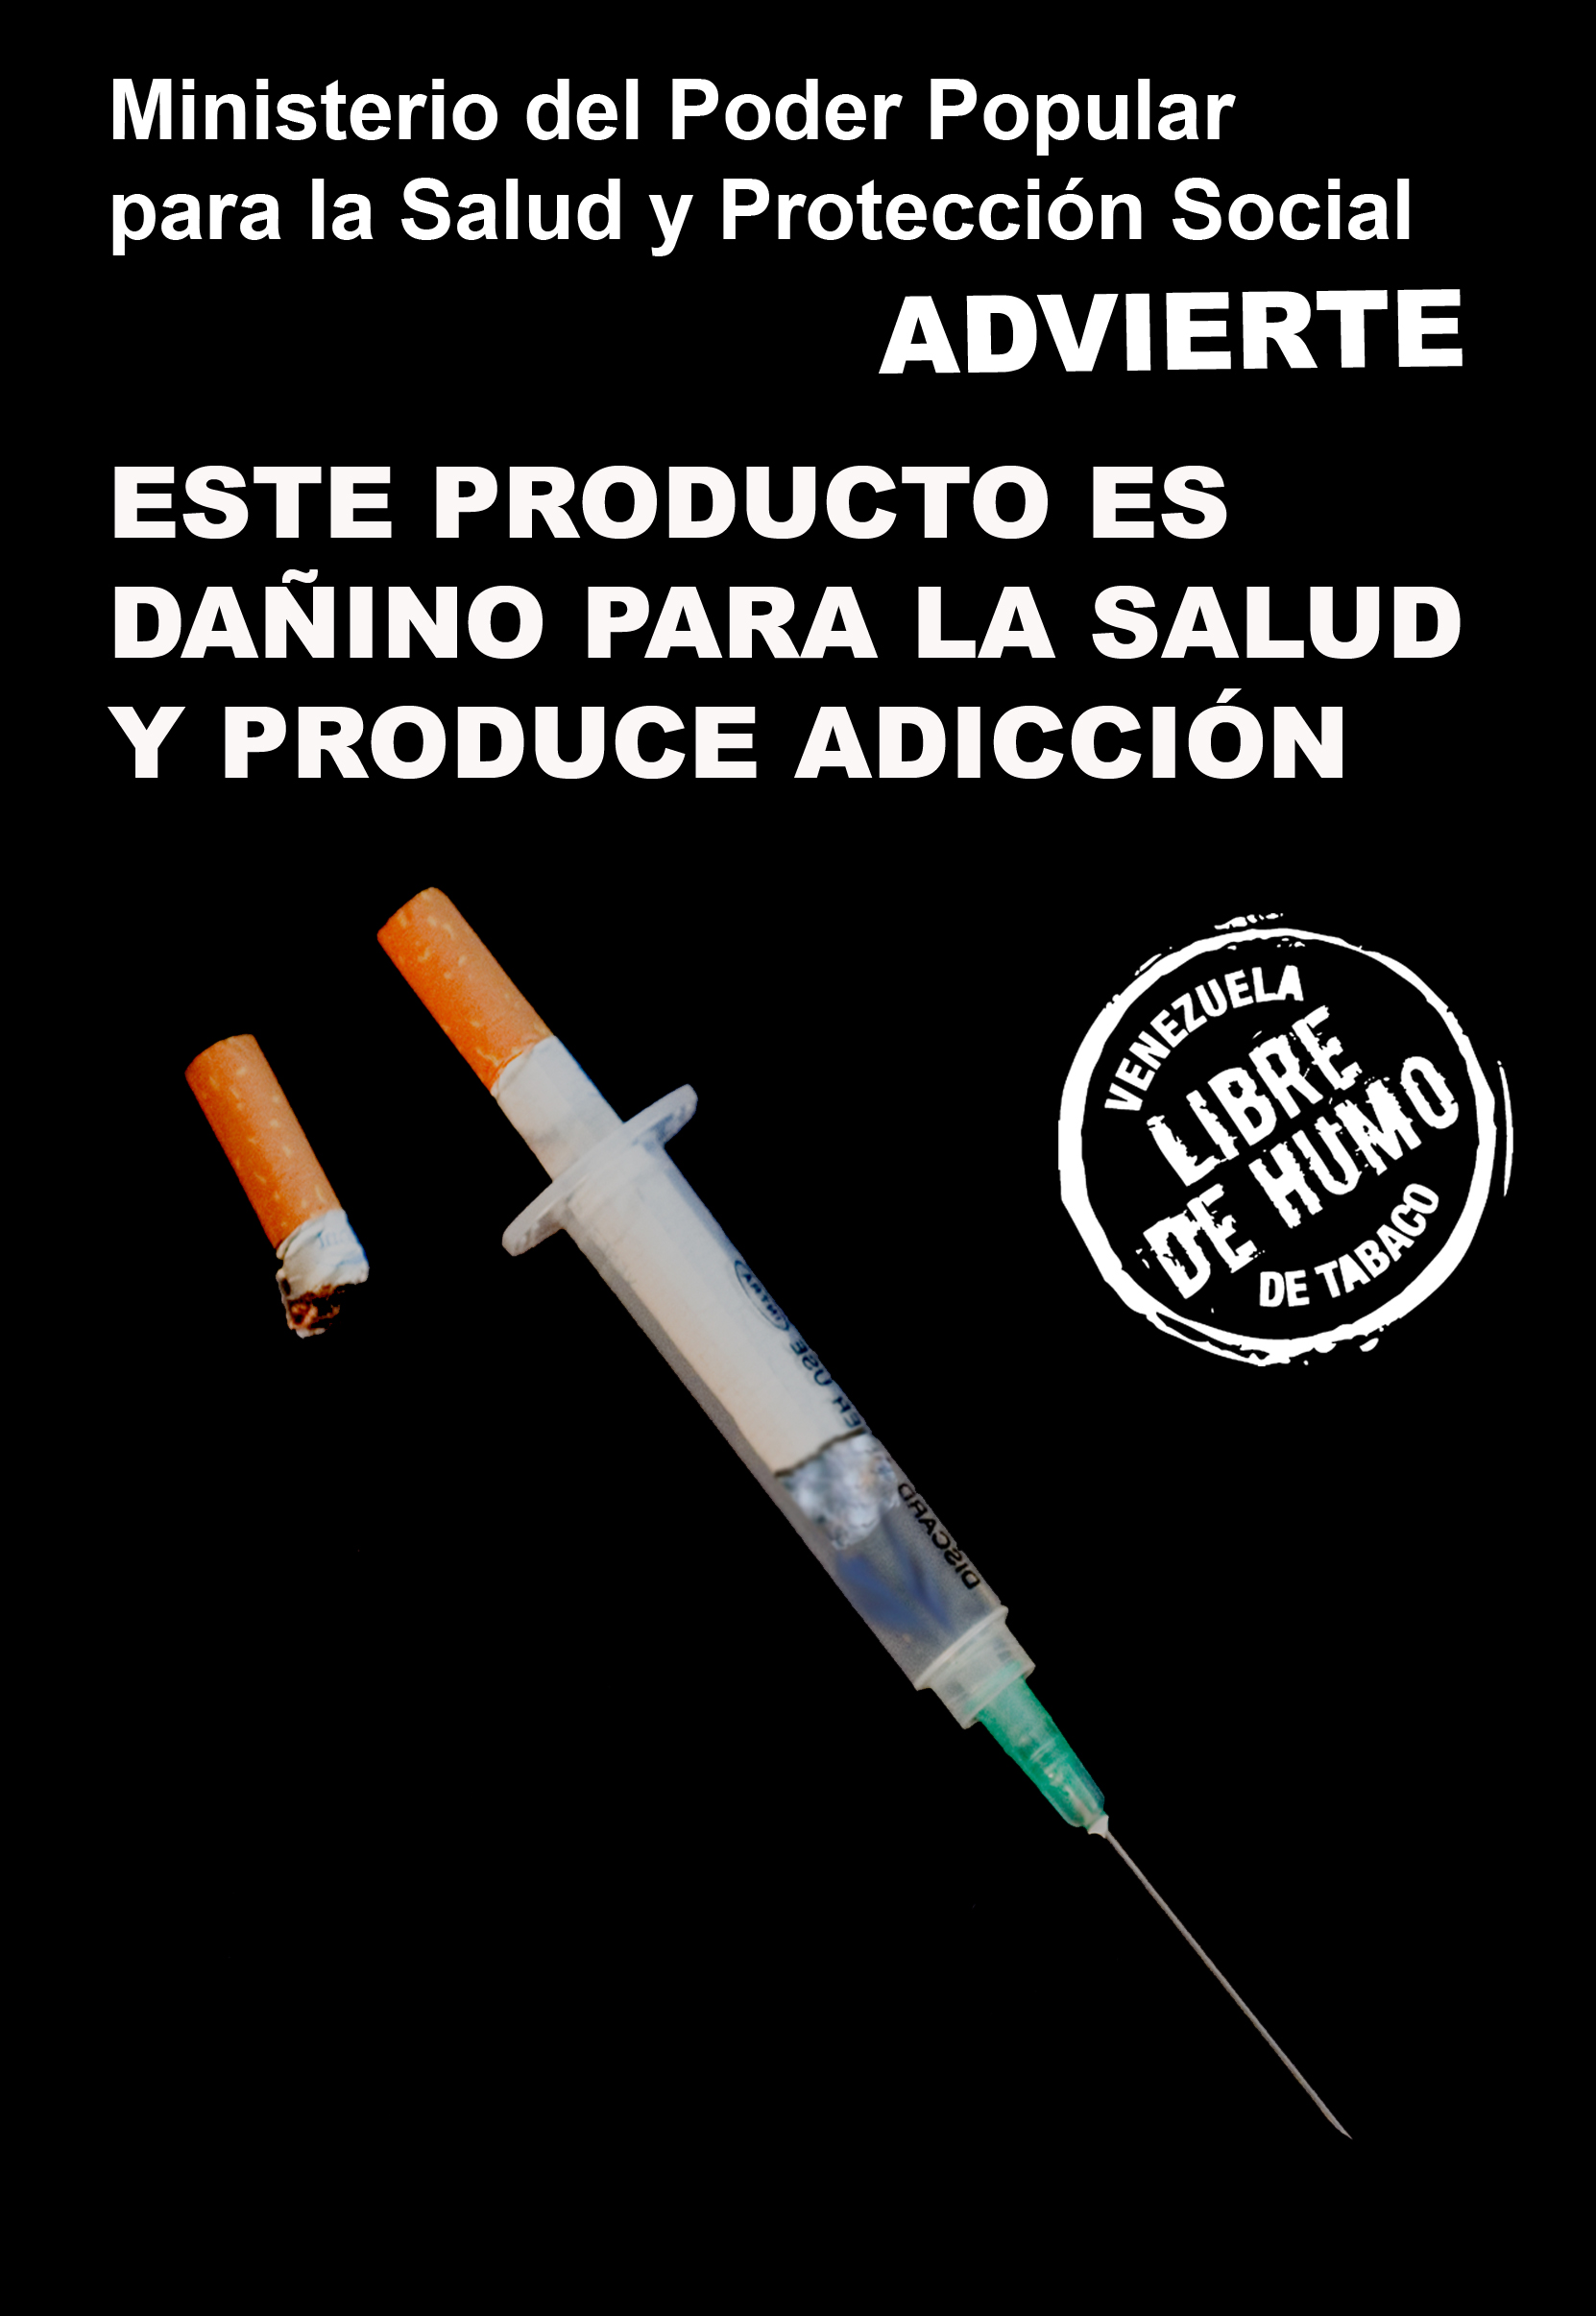 Venezuela 2009 Addiction - cigarettes are addictive, harmful